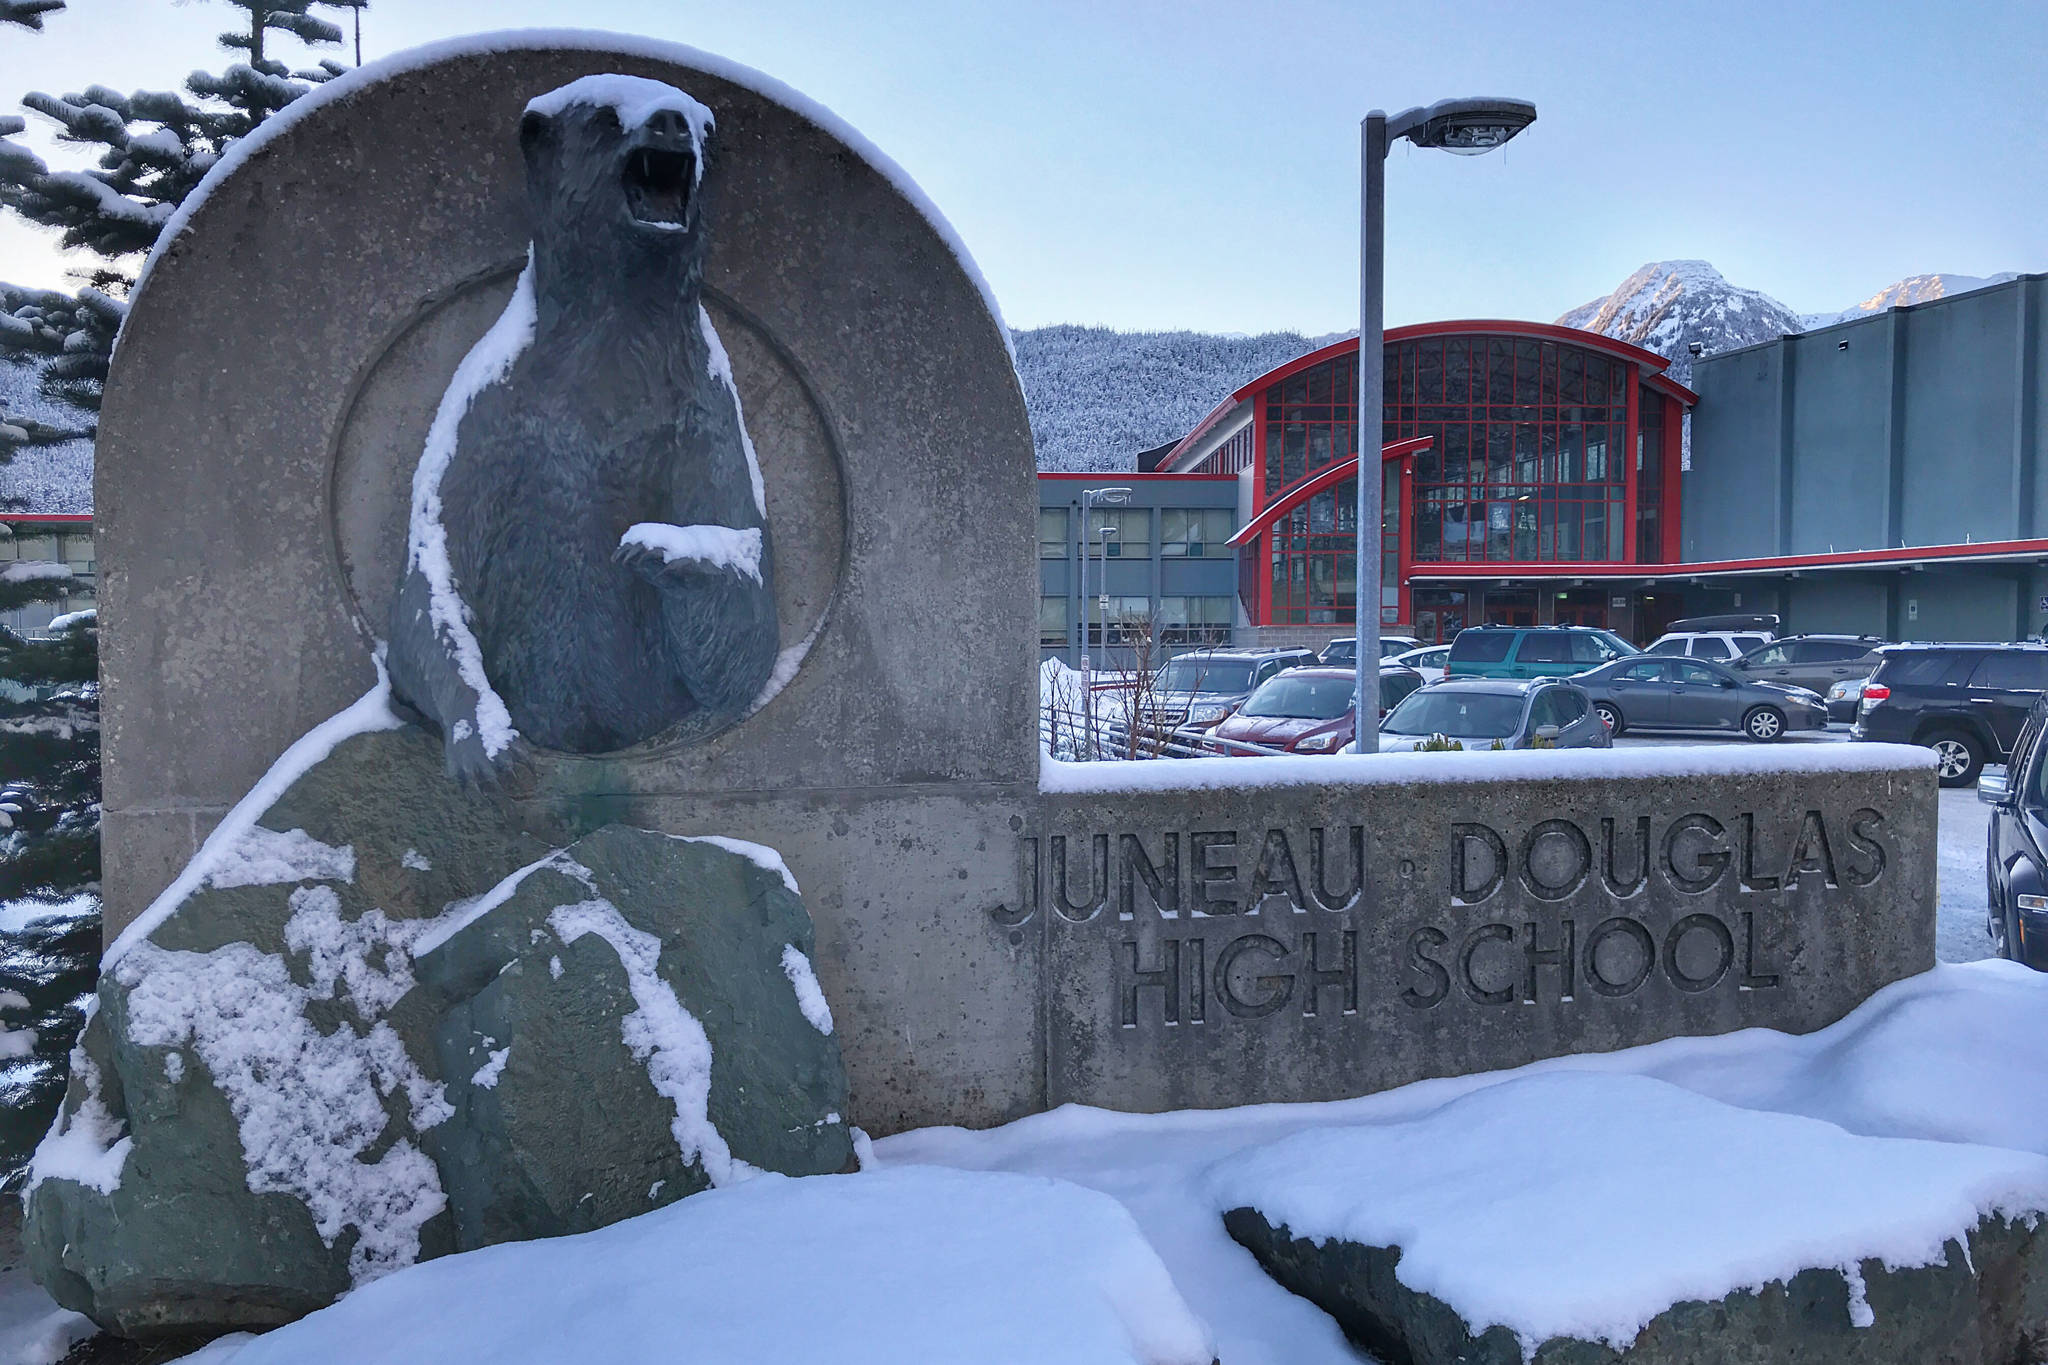 Juneau-Douglas High School pictured on Tuesday, Jan. 8, 2019. (Michael Penn | Juneau Empire)